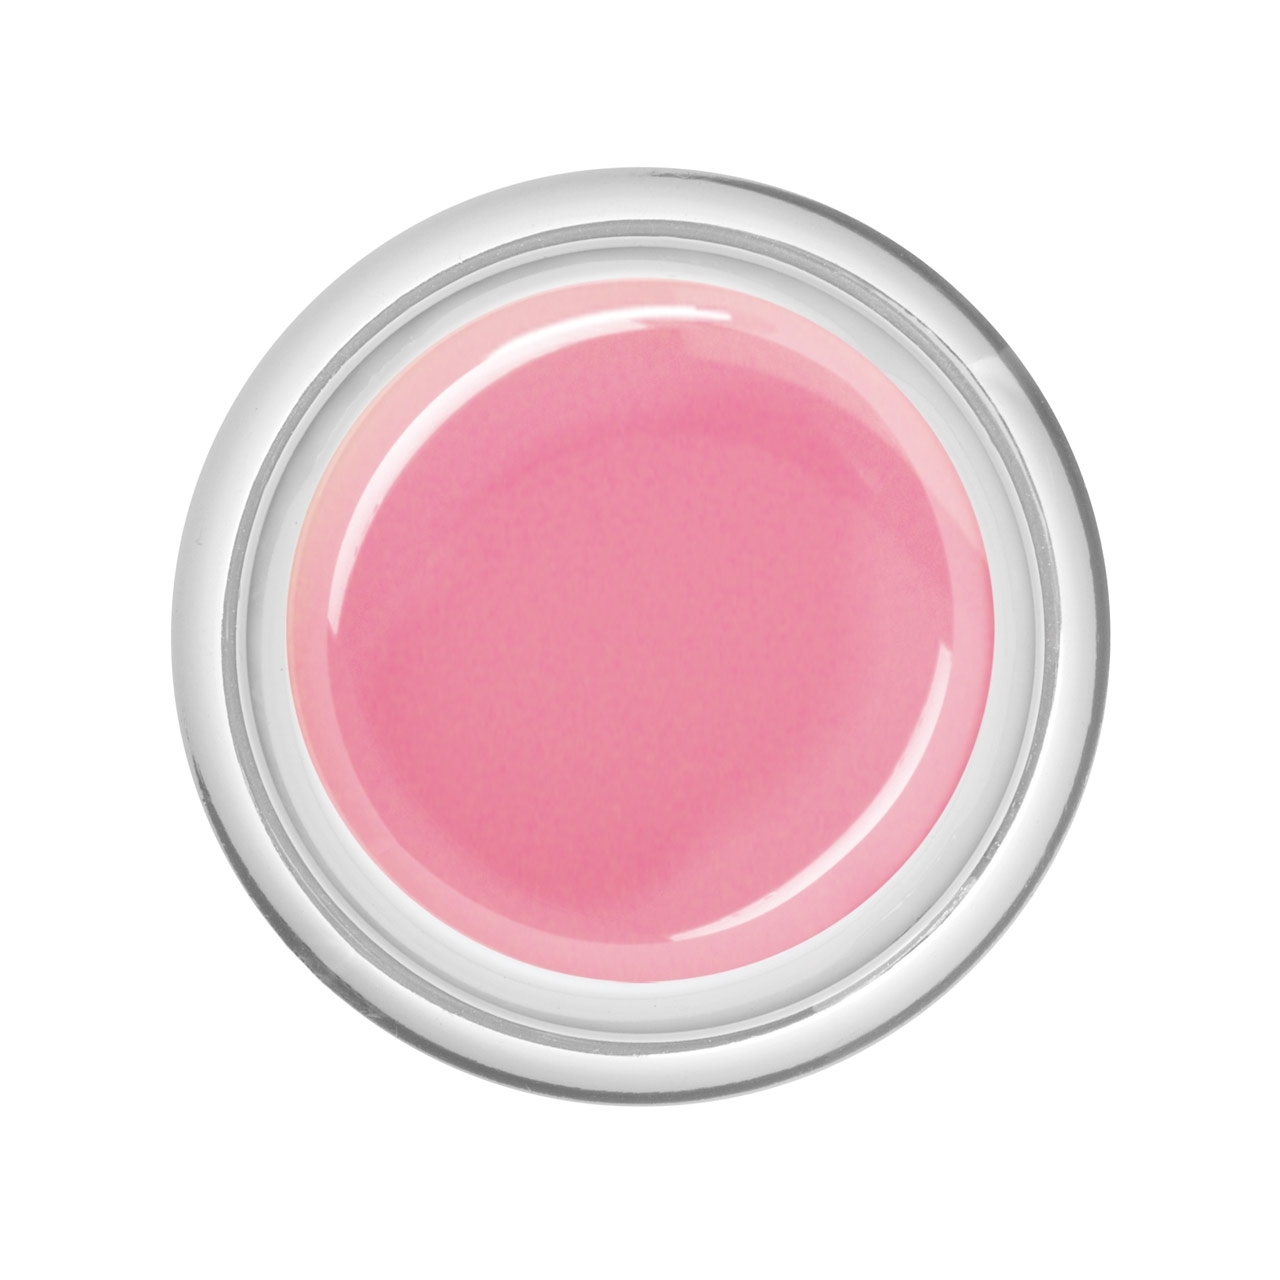 BAEHR BEAUTY CONCEPT - NAILS Modellage-Gel Klar Pink 30 ml